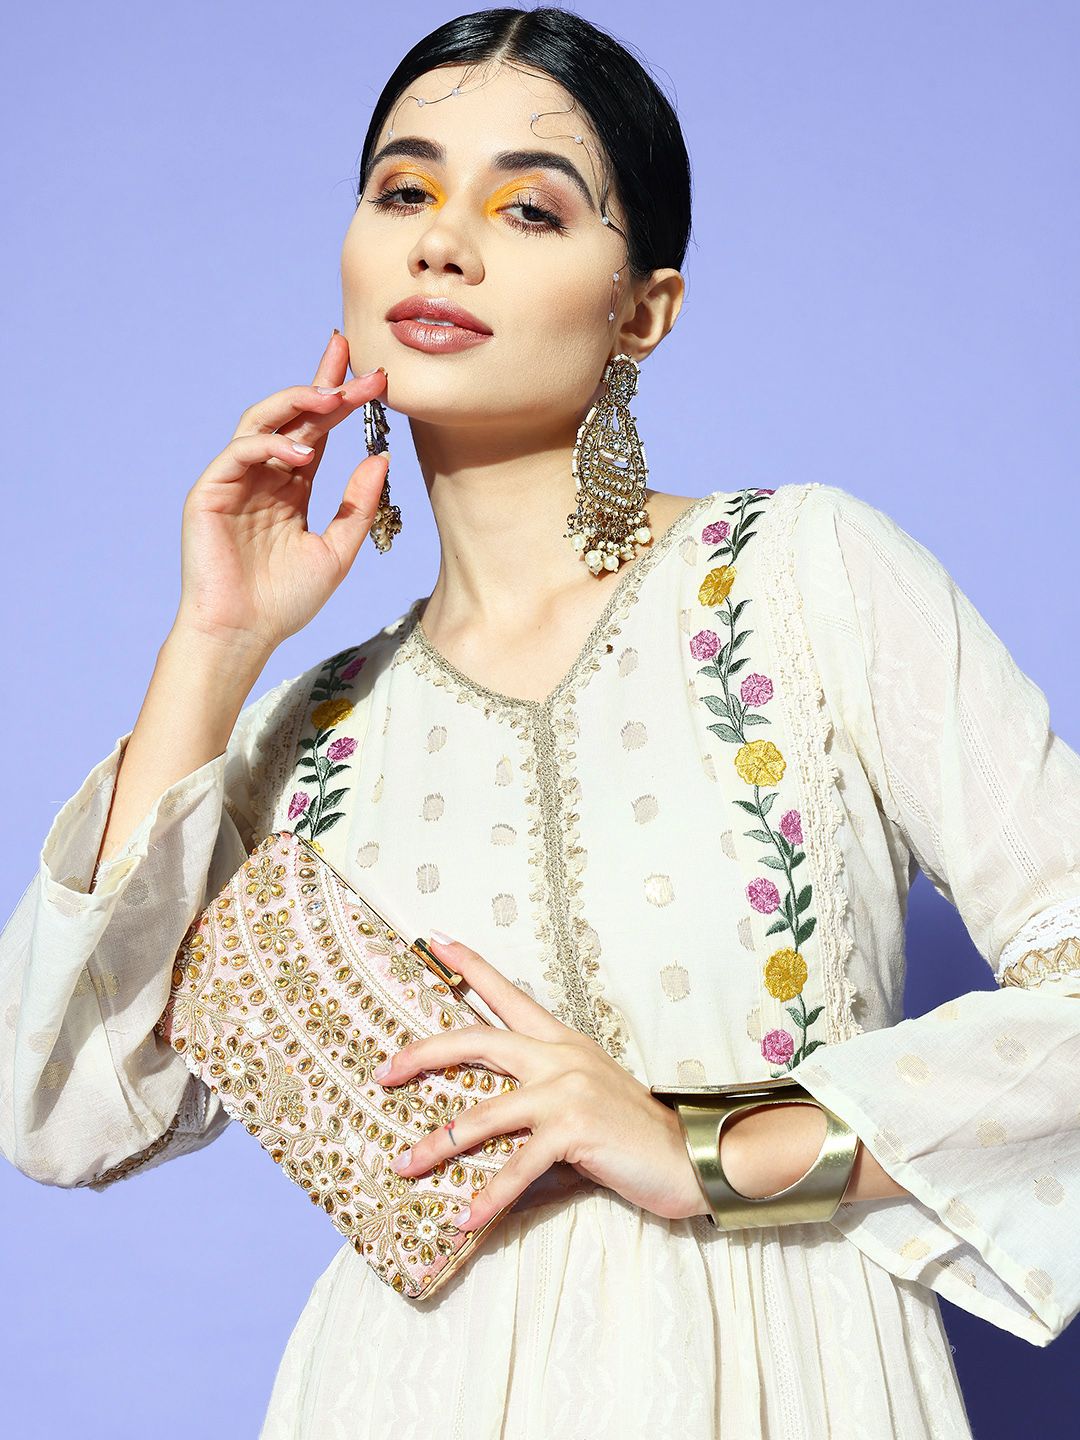 Ishin Women Classy Off White Ethnic Motifs Craft Culture Dress Price in India